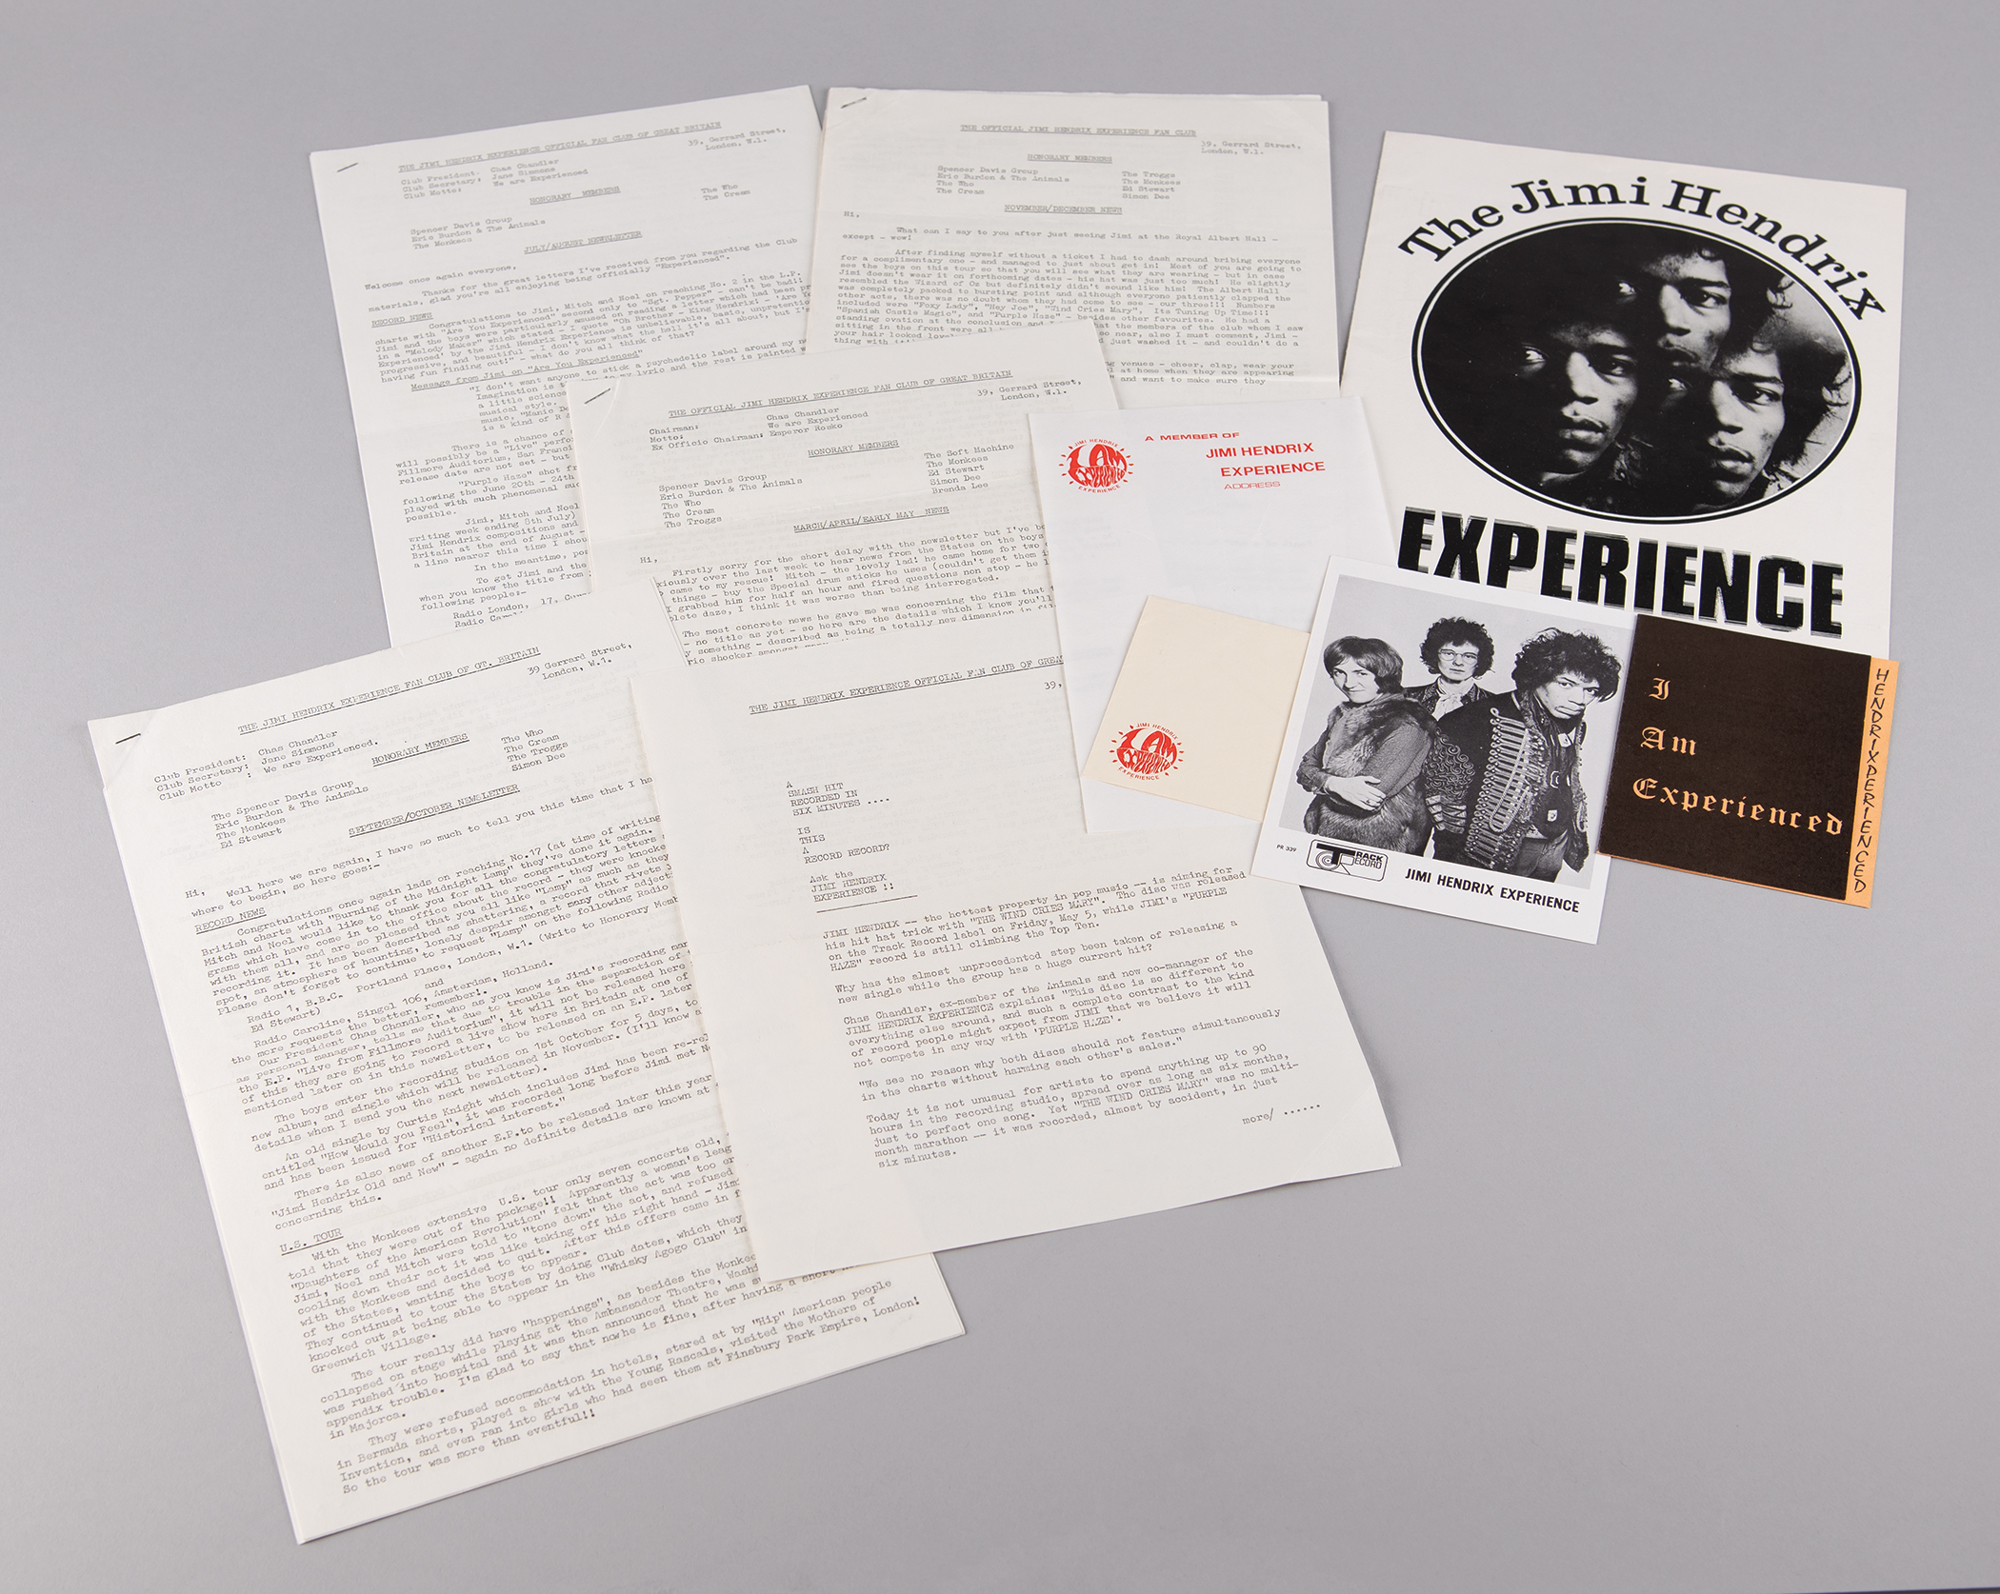 Lot #617 Jimi Hendrix Experience Collection of Early UK Fan Club Memorabilia